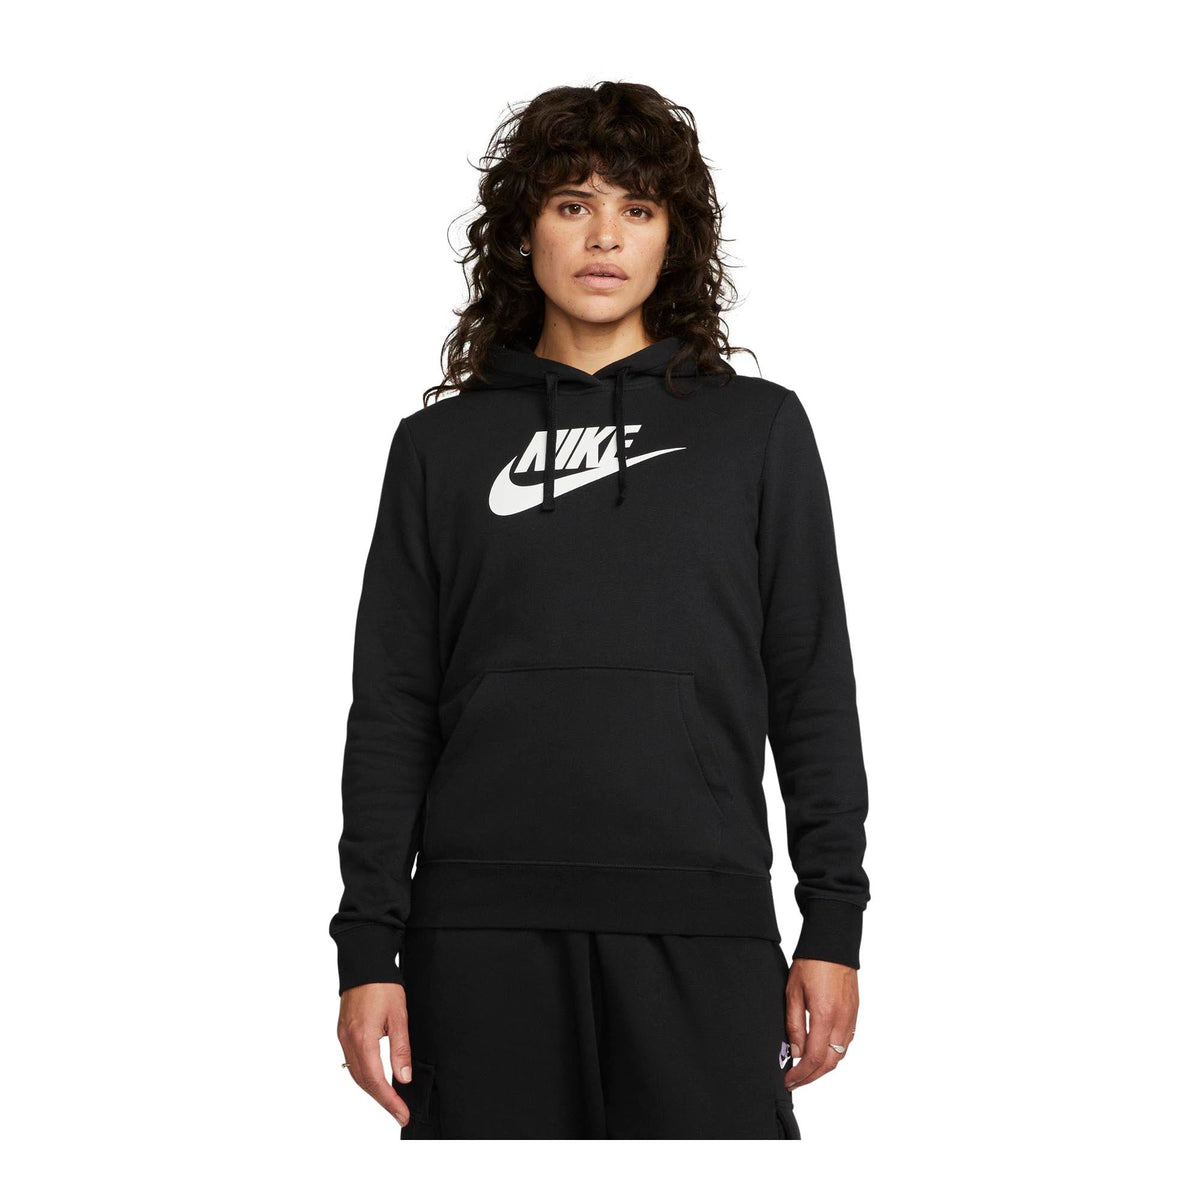 Nike, Sportswear Club Womens T Shirt